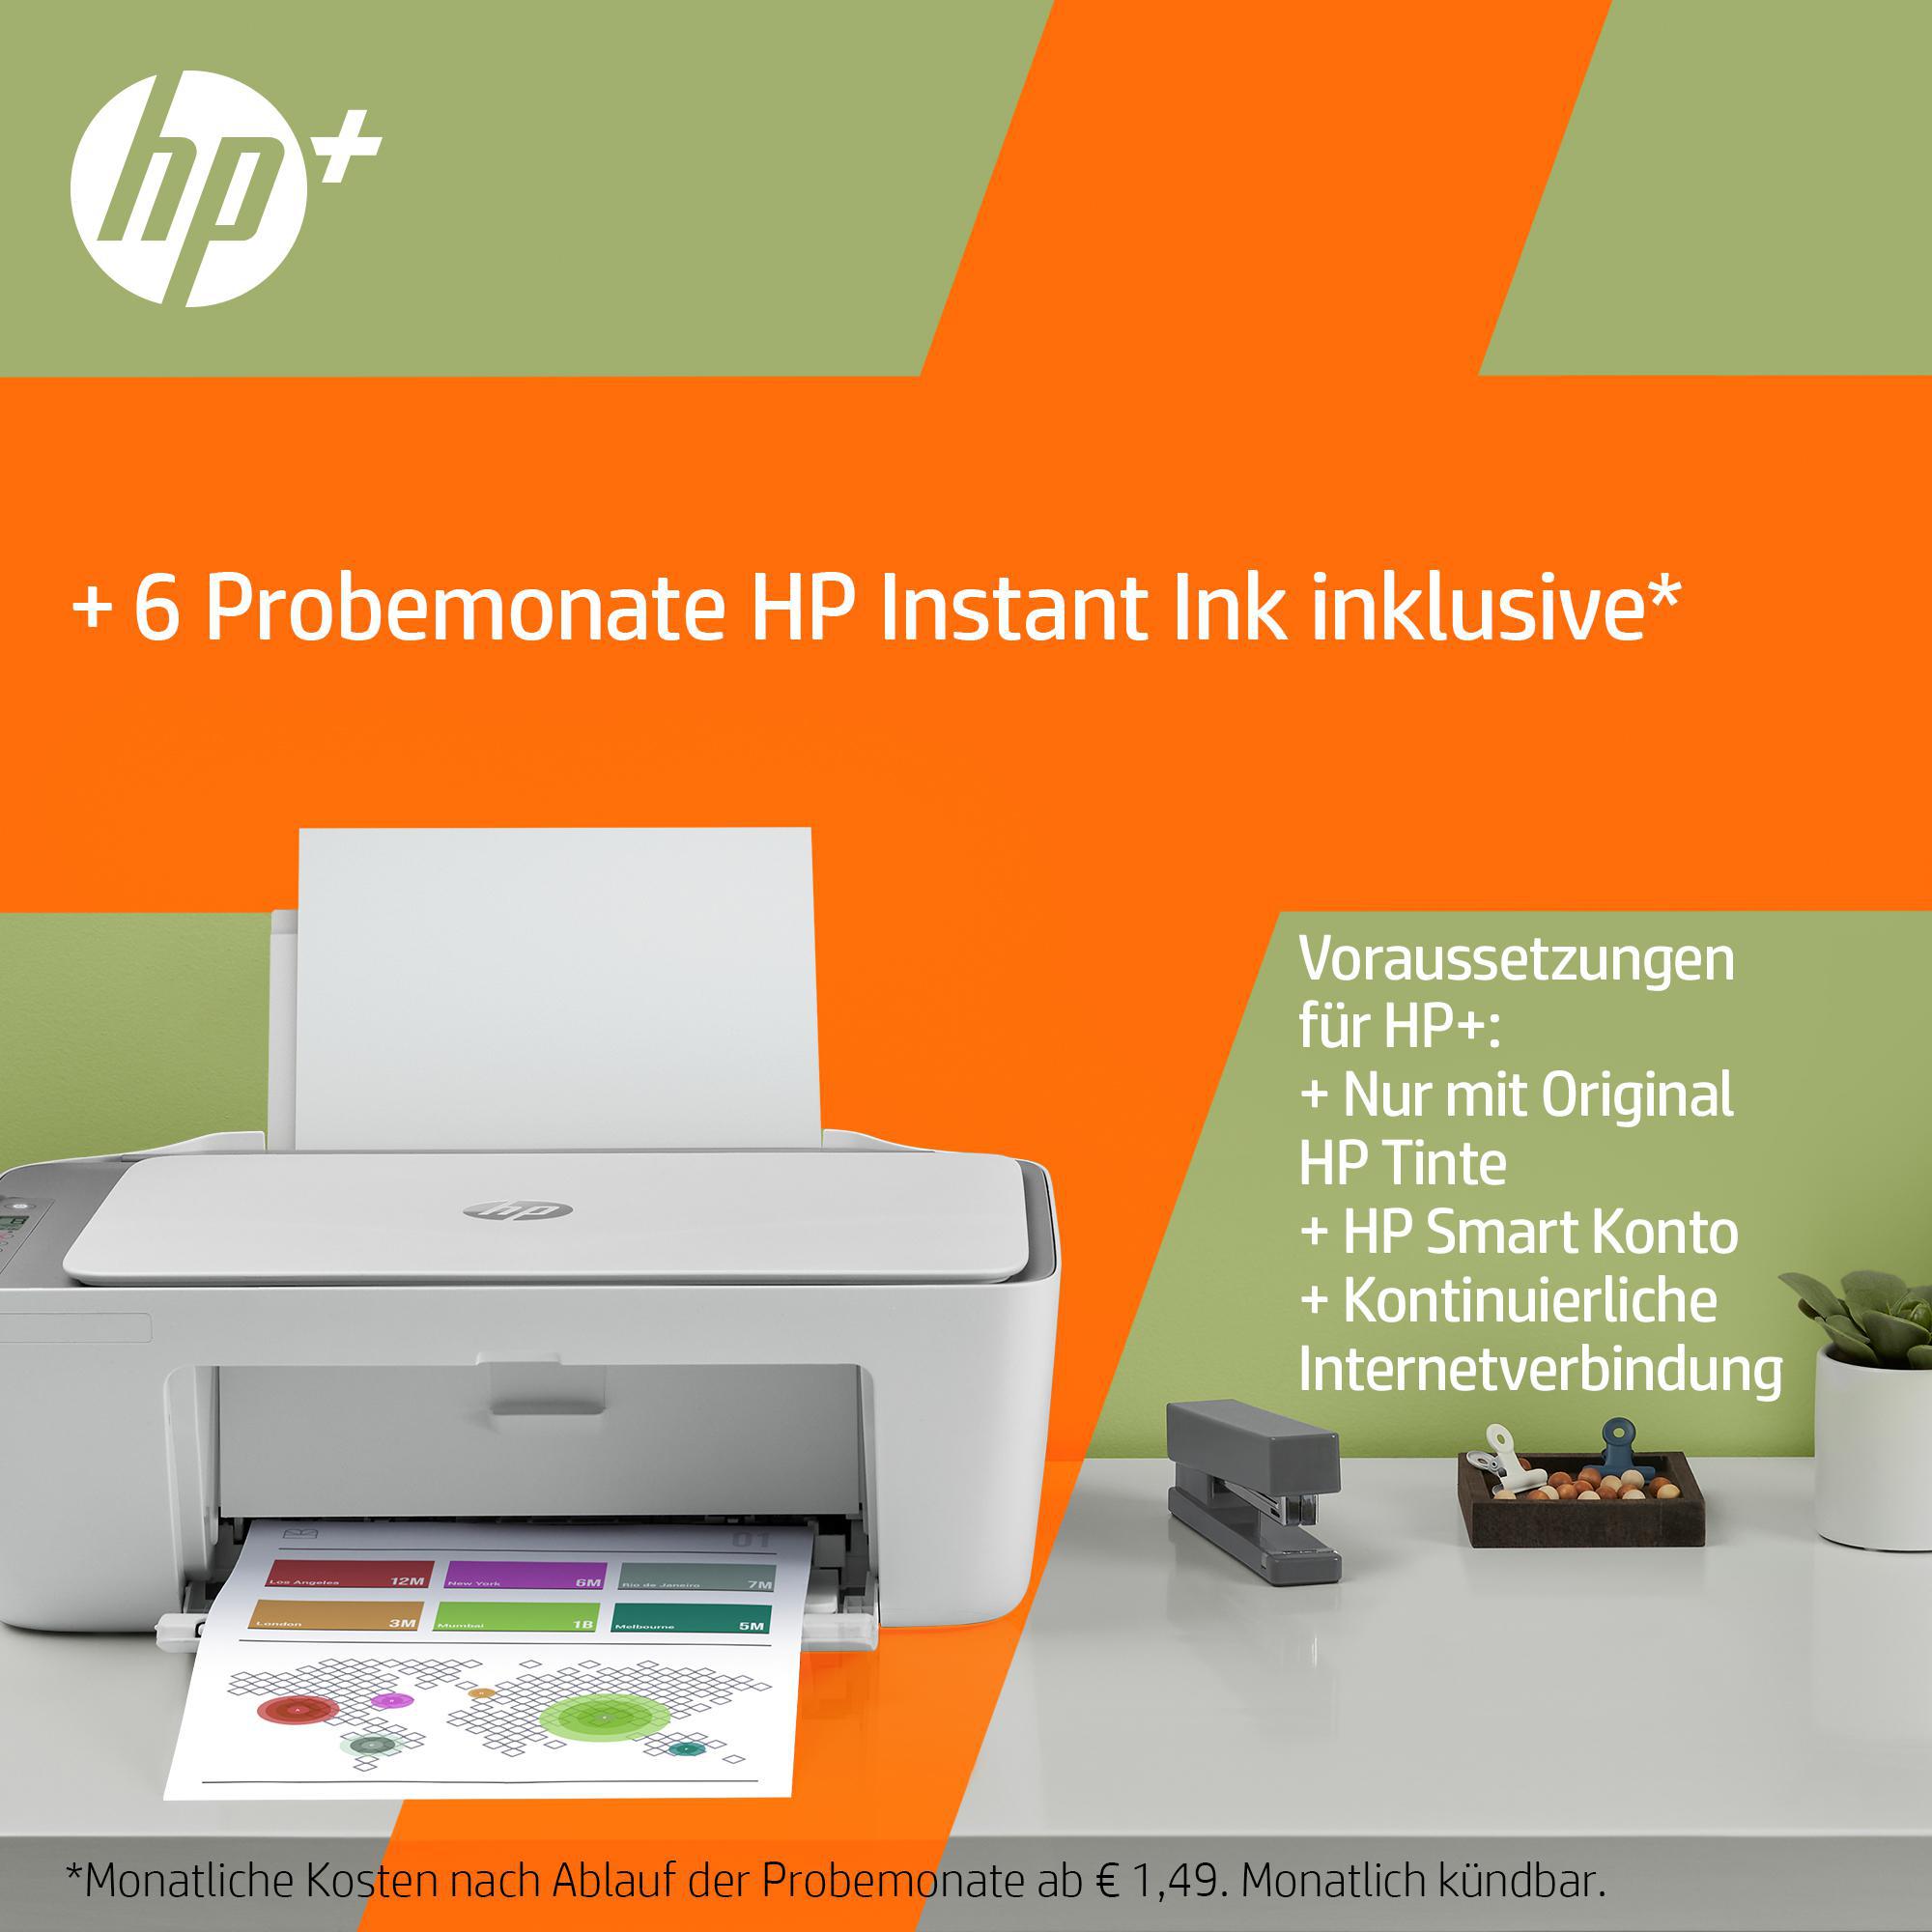 2720e Ink) Inkjet WLAN DeskJet (Instant Thermal HP Multifunktionsdrucker